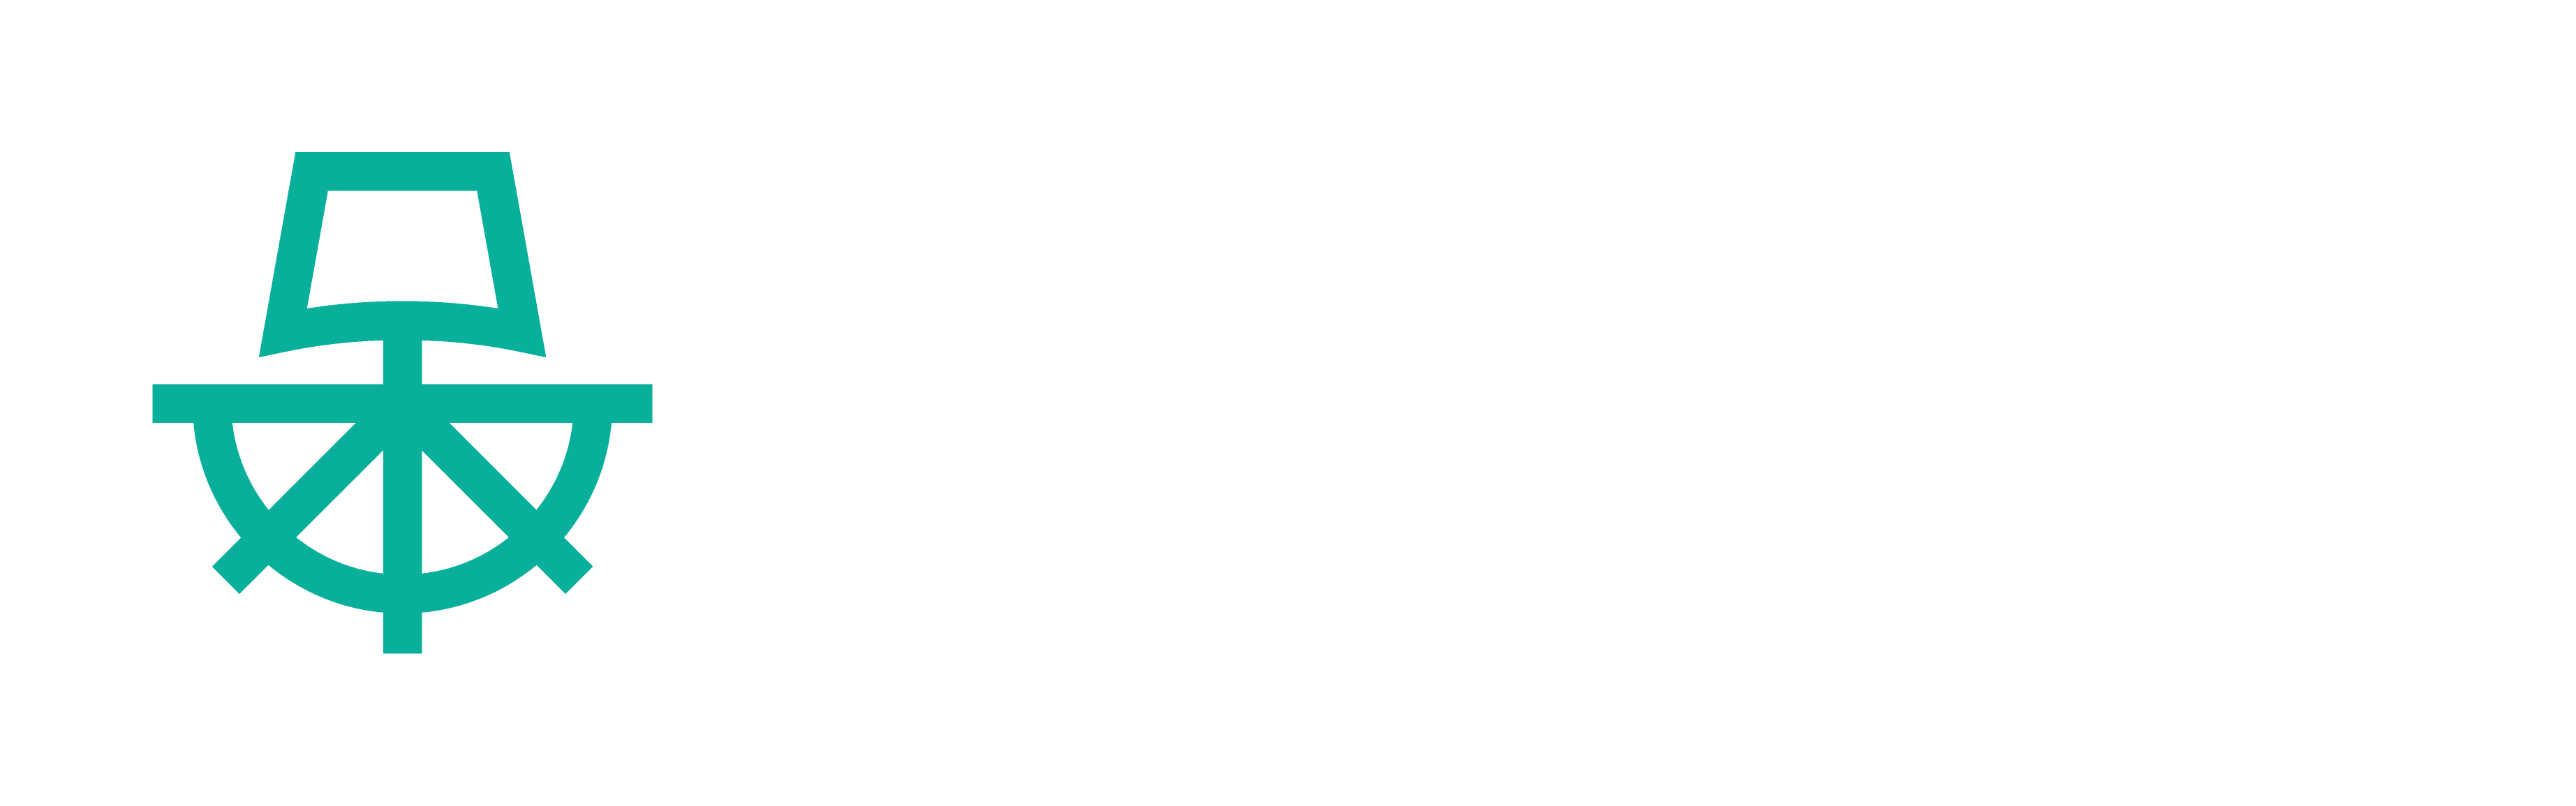 Paralus